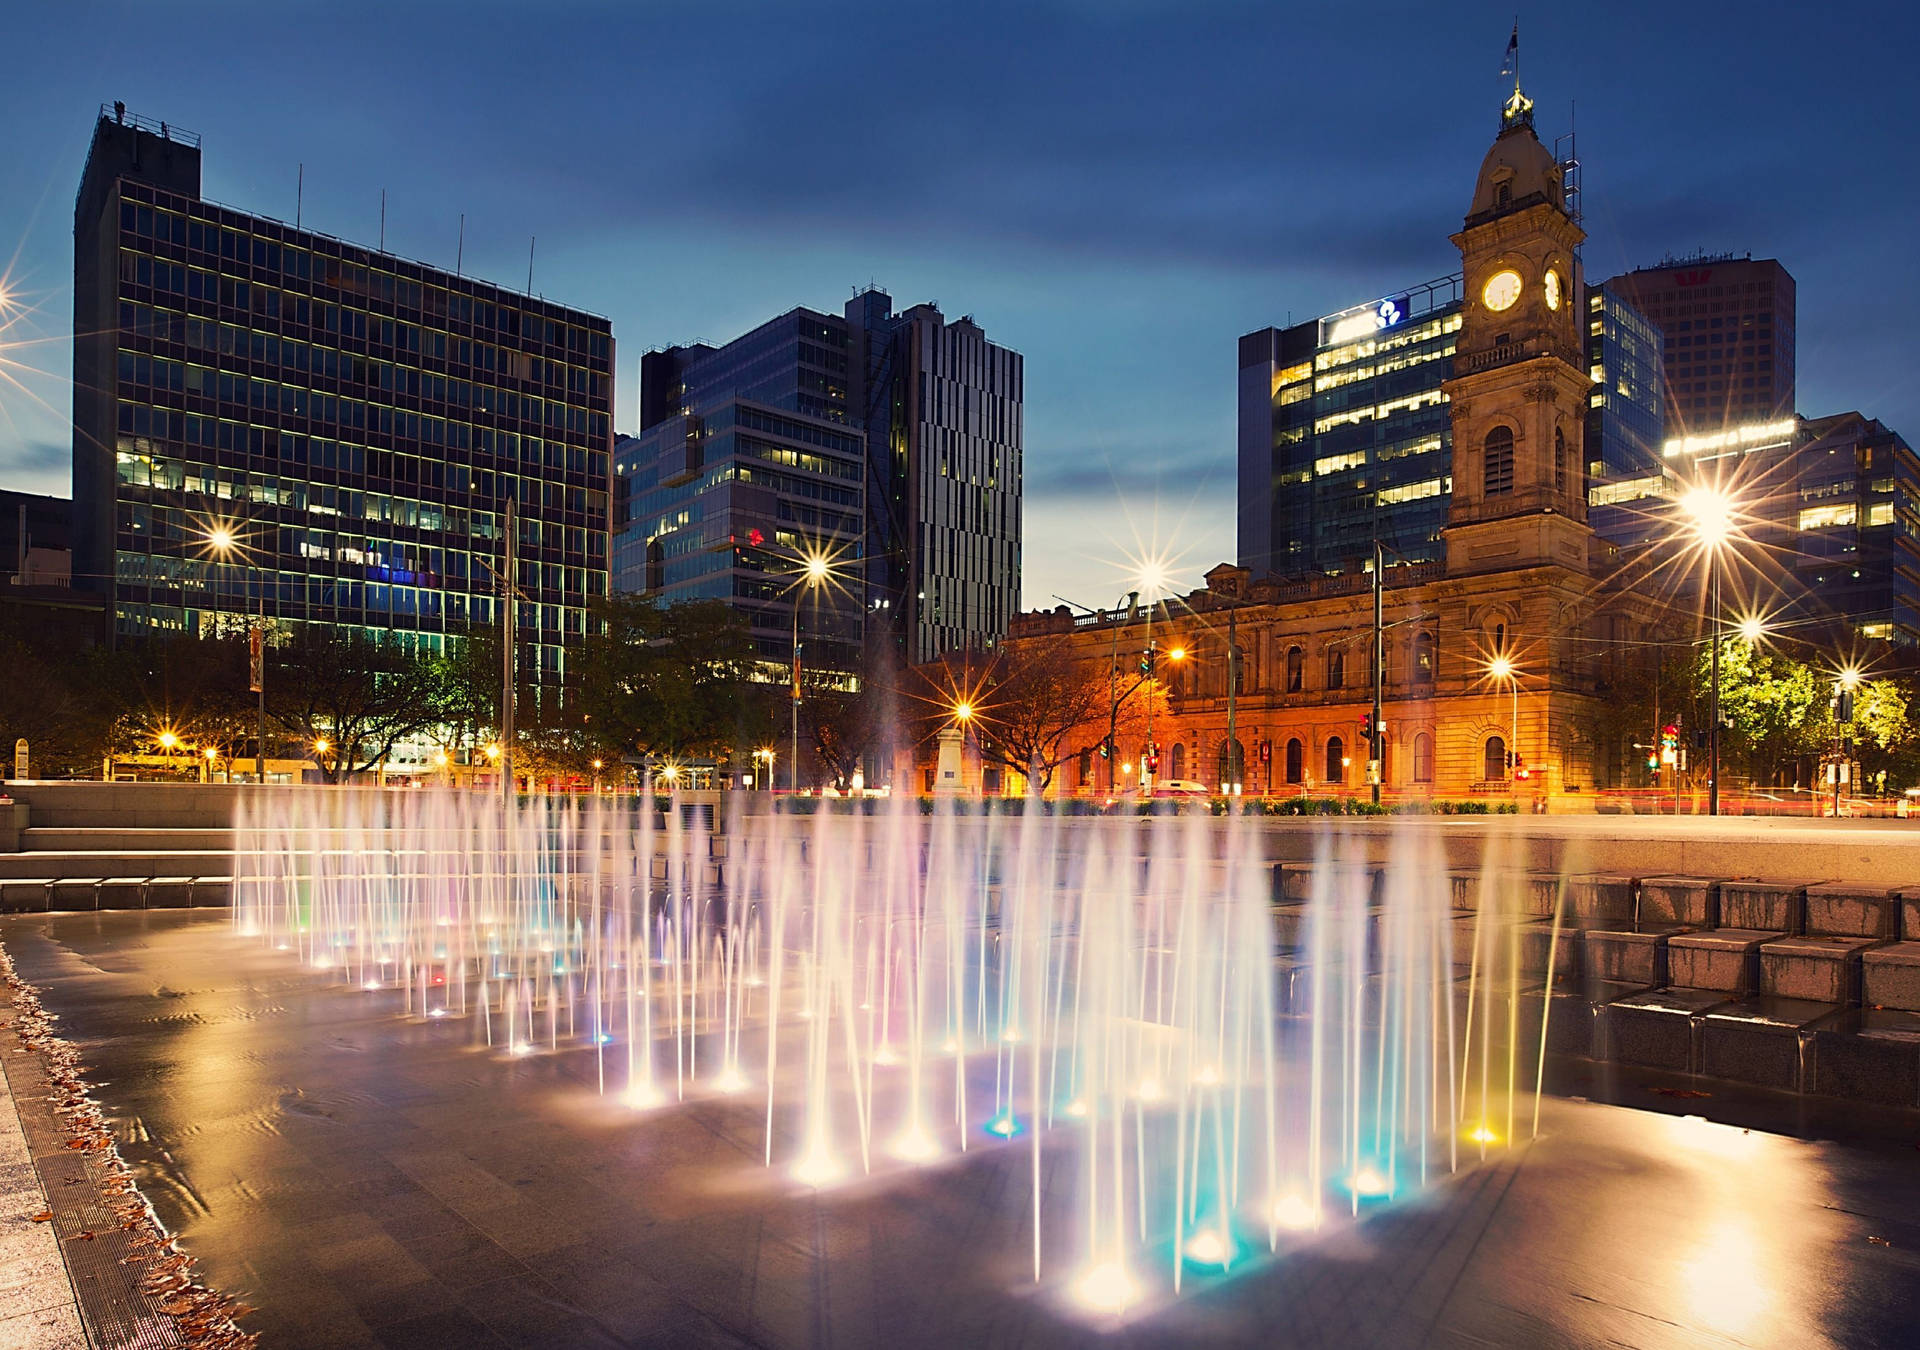 Adelaide Victoria Square Fountain Background